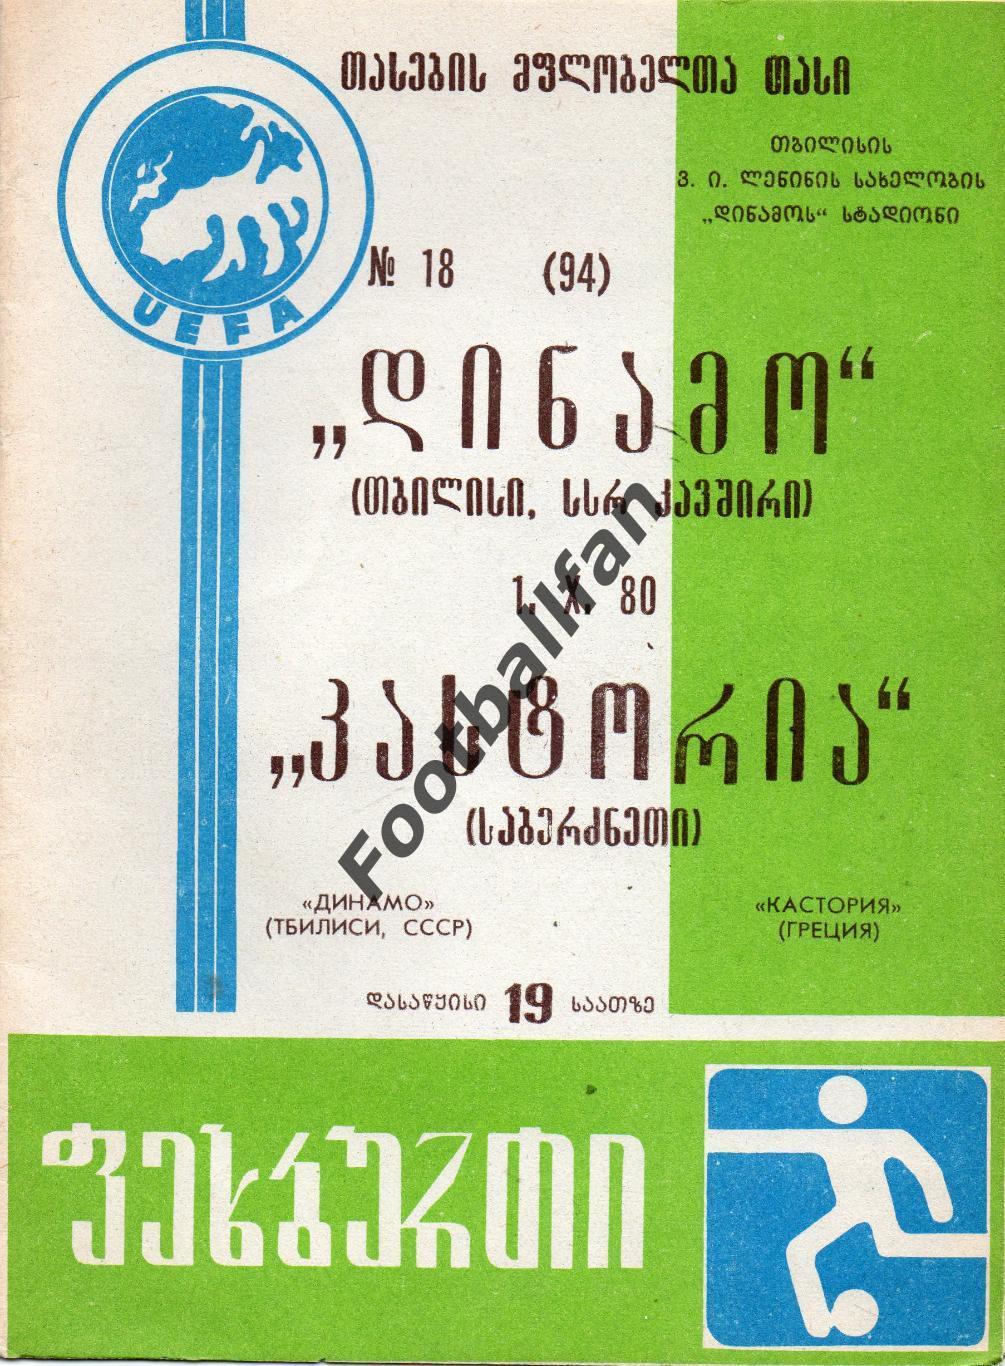 Динамо Тбилиси , СССР - Кастория Греция 01.10.1980